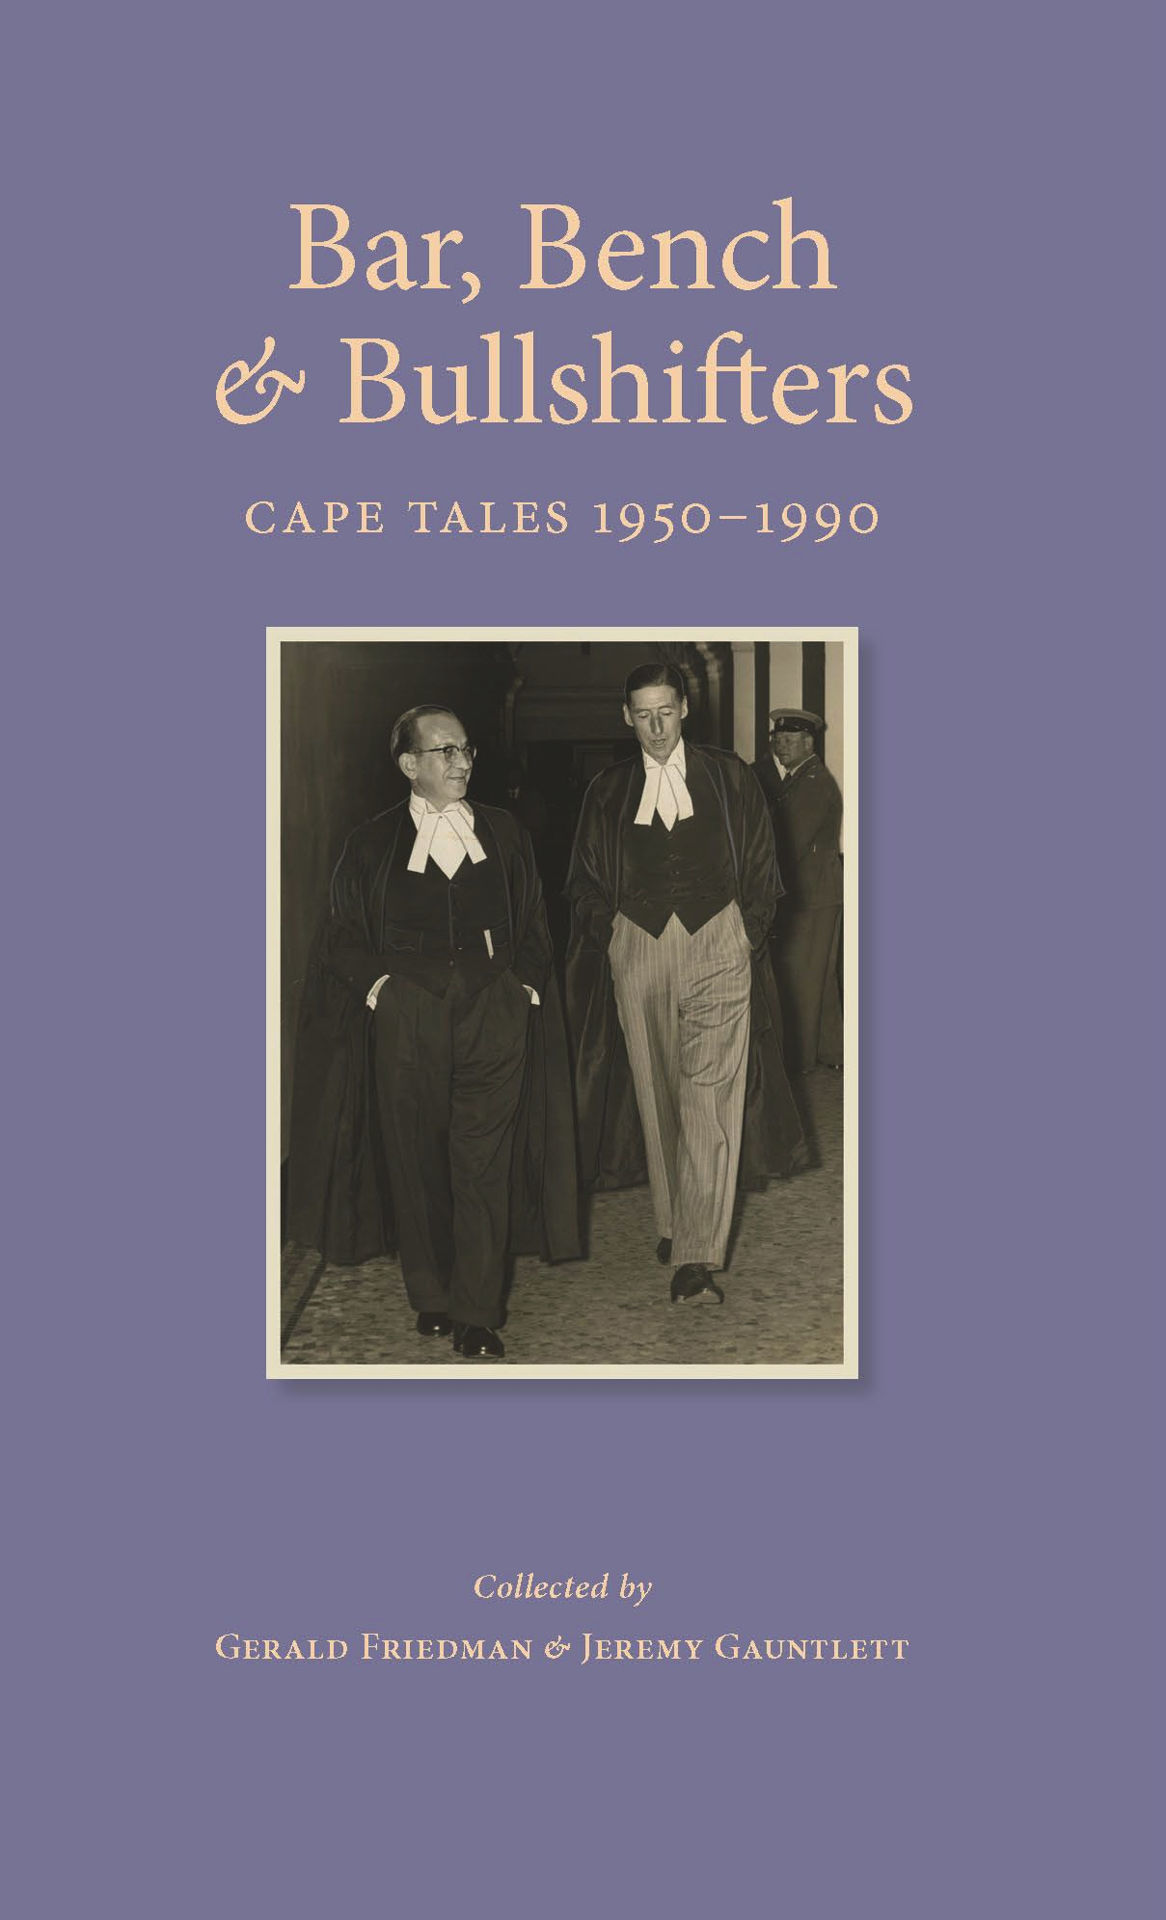 Bar, Bench & Bullshifters: Cape Tales 1950 - 1990